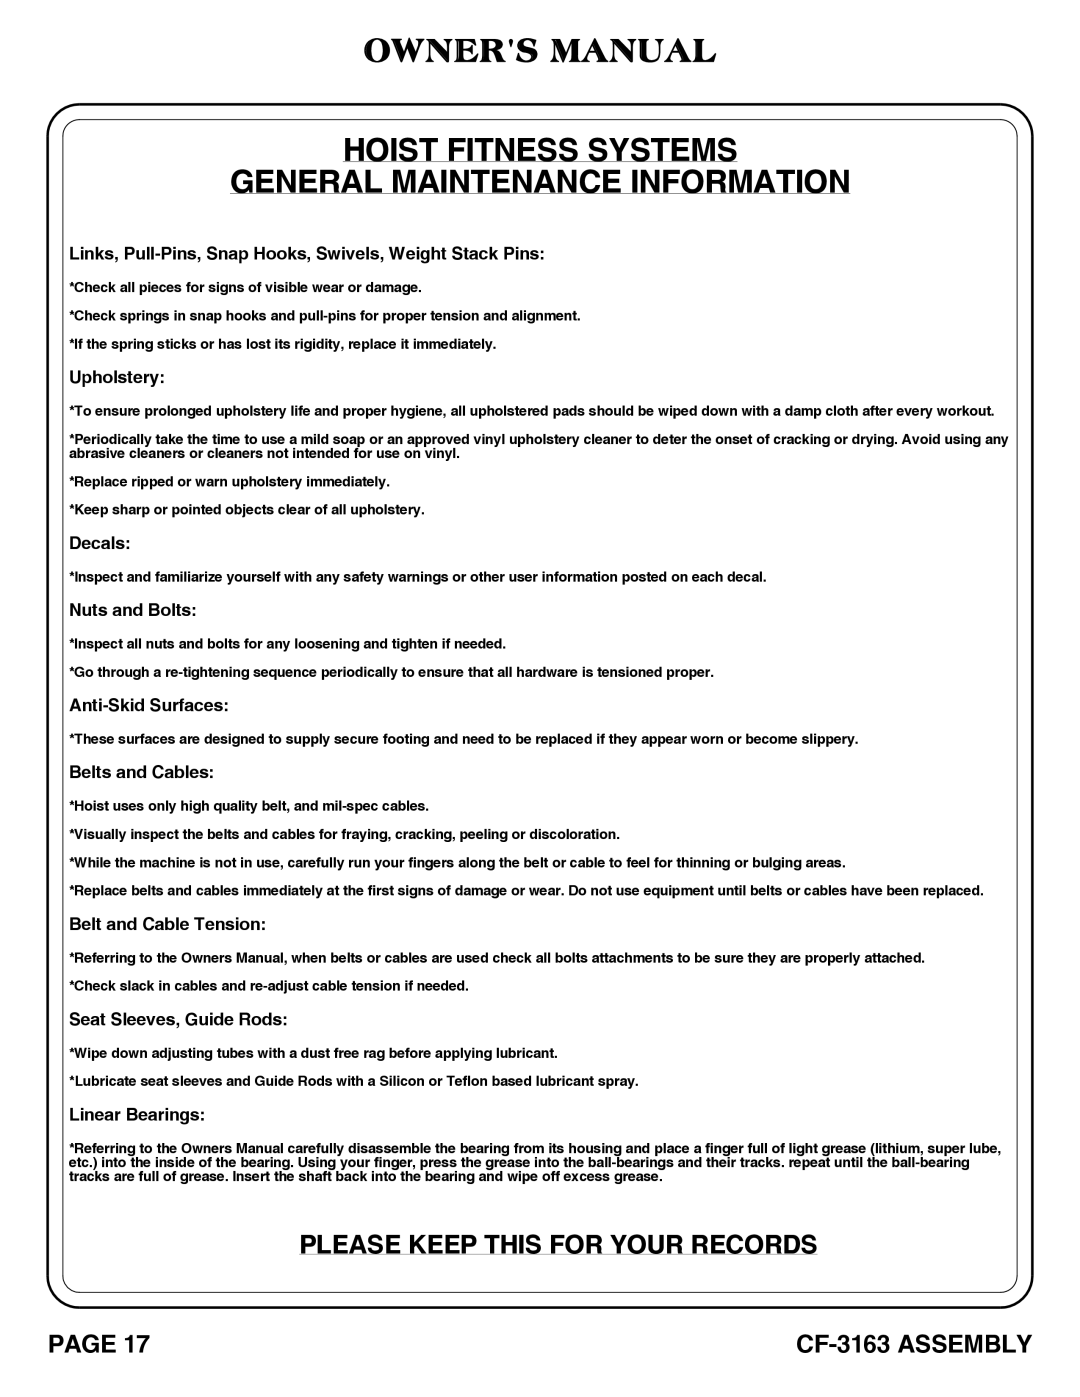 Hoist Fitness CF-3163 owner manual Hoist Fitness Systems General Maintenance Information 